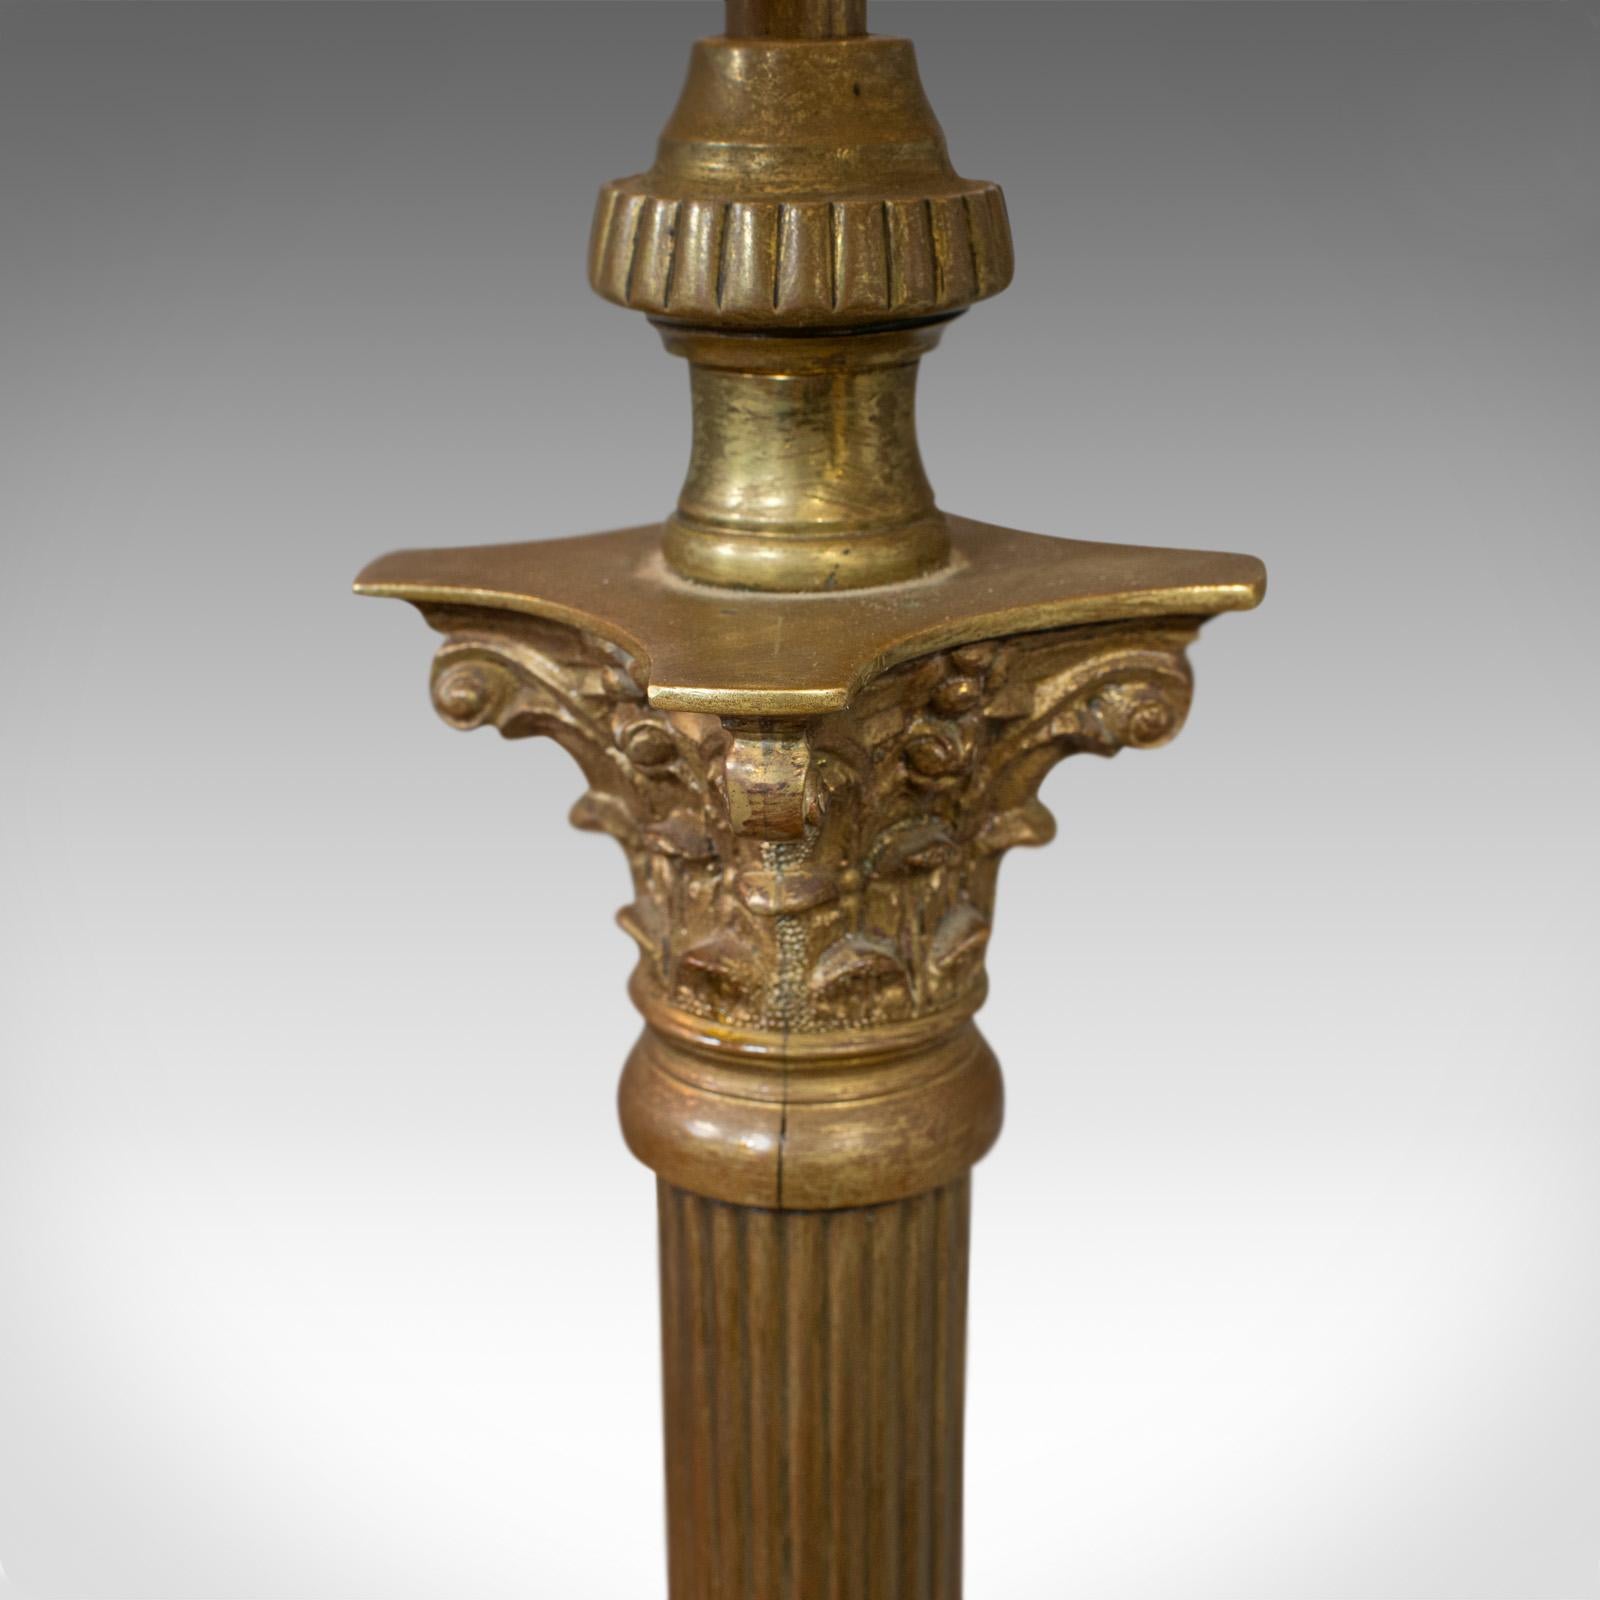 British Antique Standard Lamp, English, Brass, Floor Light, Edwardian, circa 1910